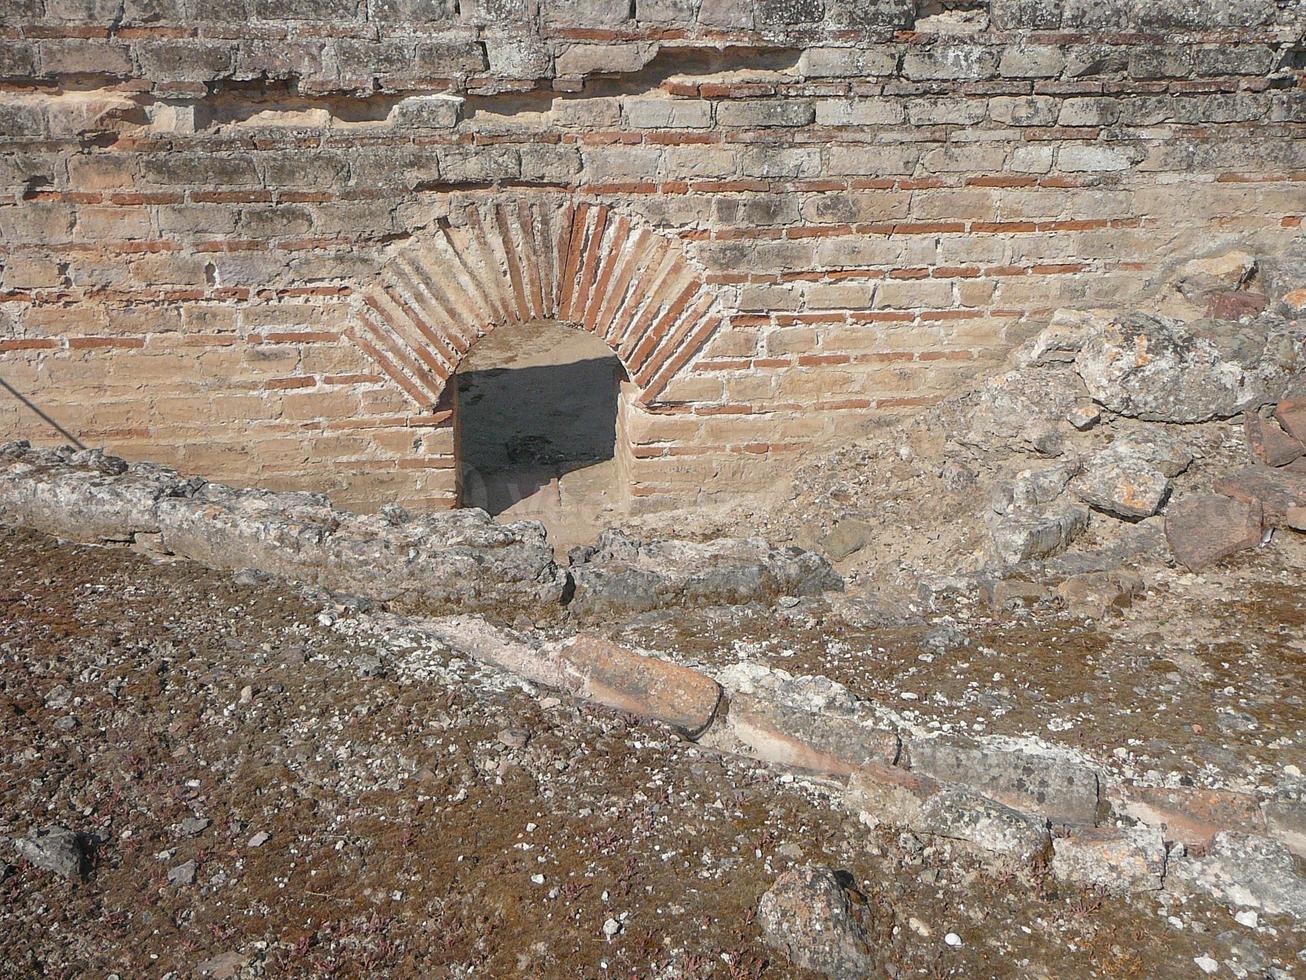 romerska badruiner i fordongianus foto